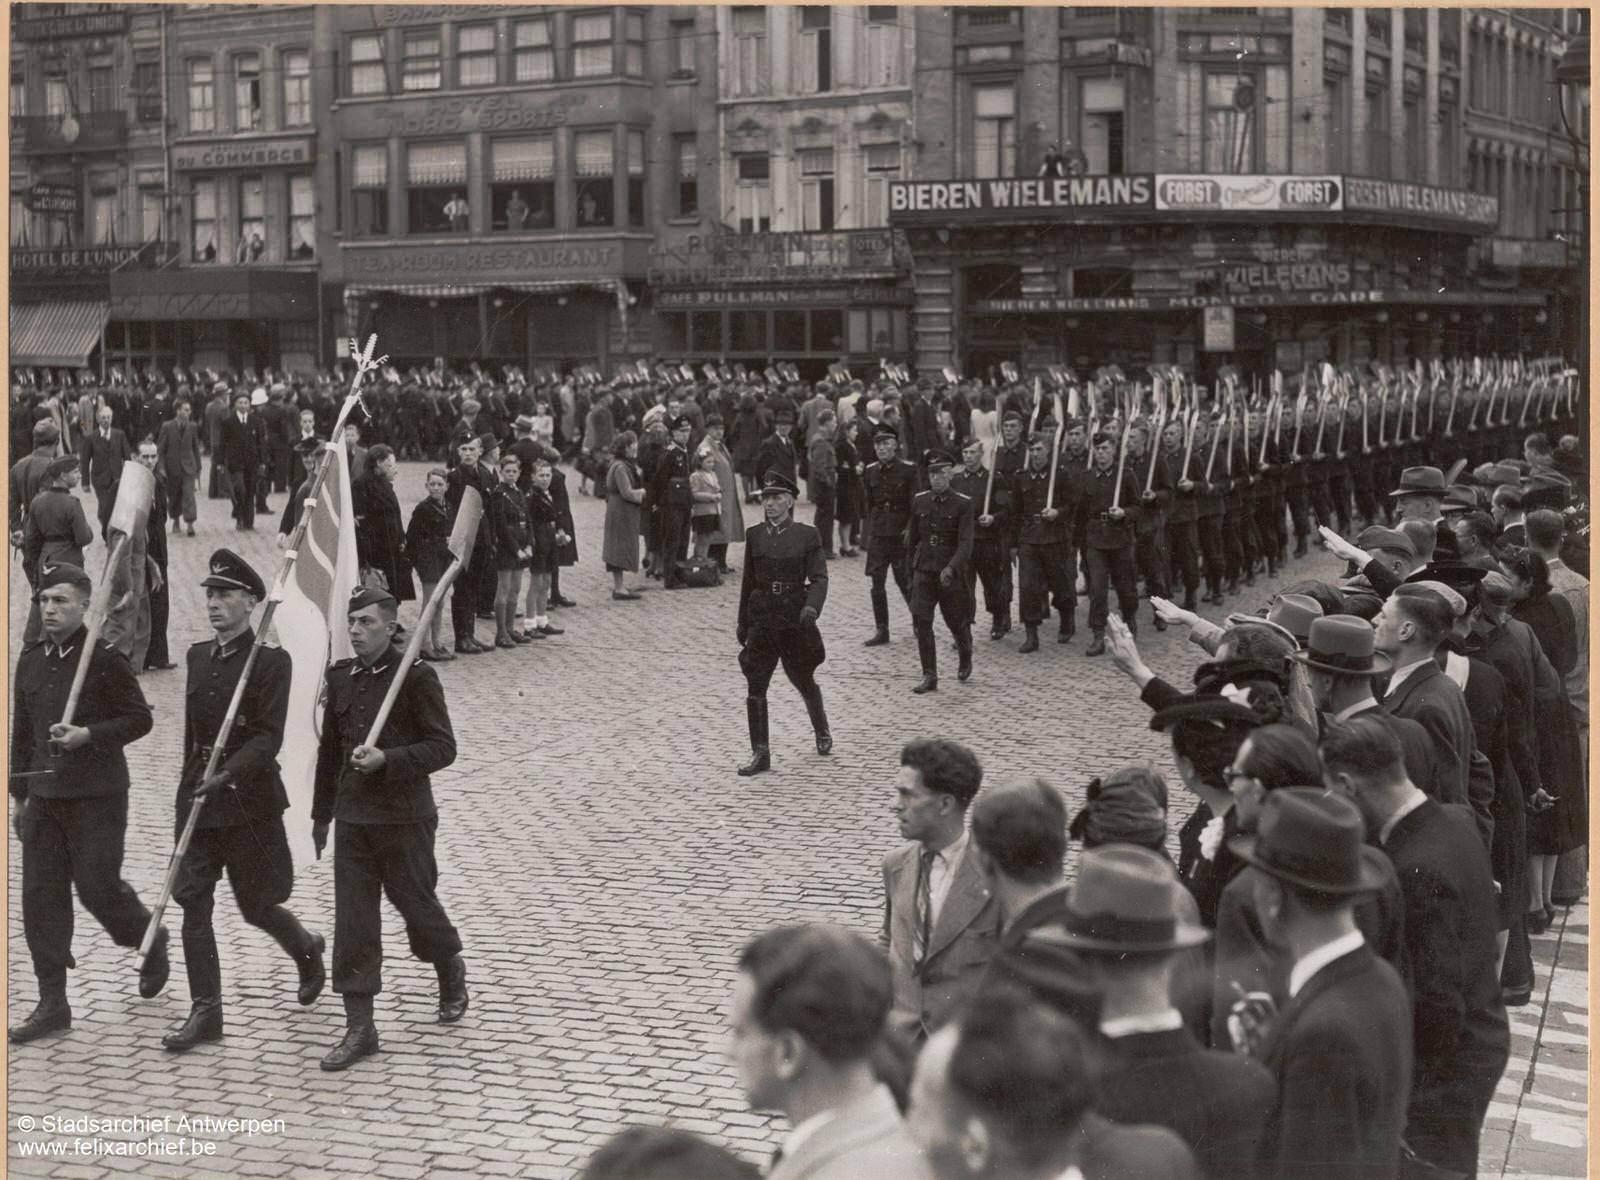 Antwerp during the Second World War